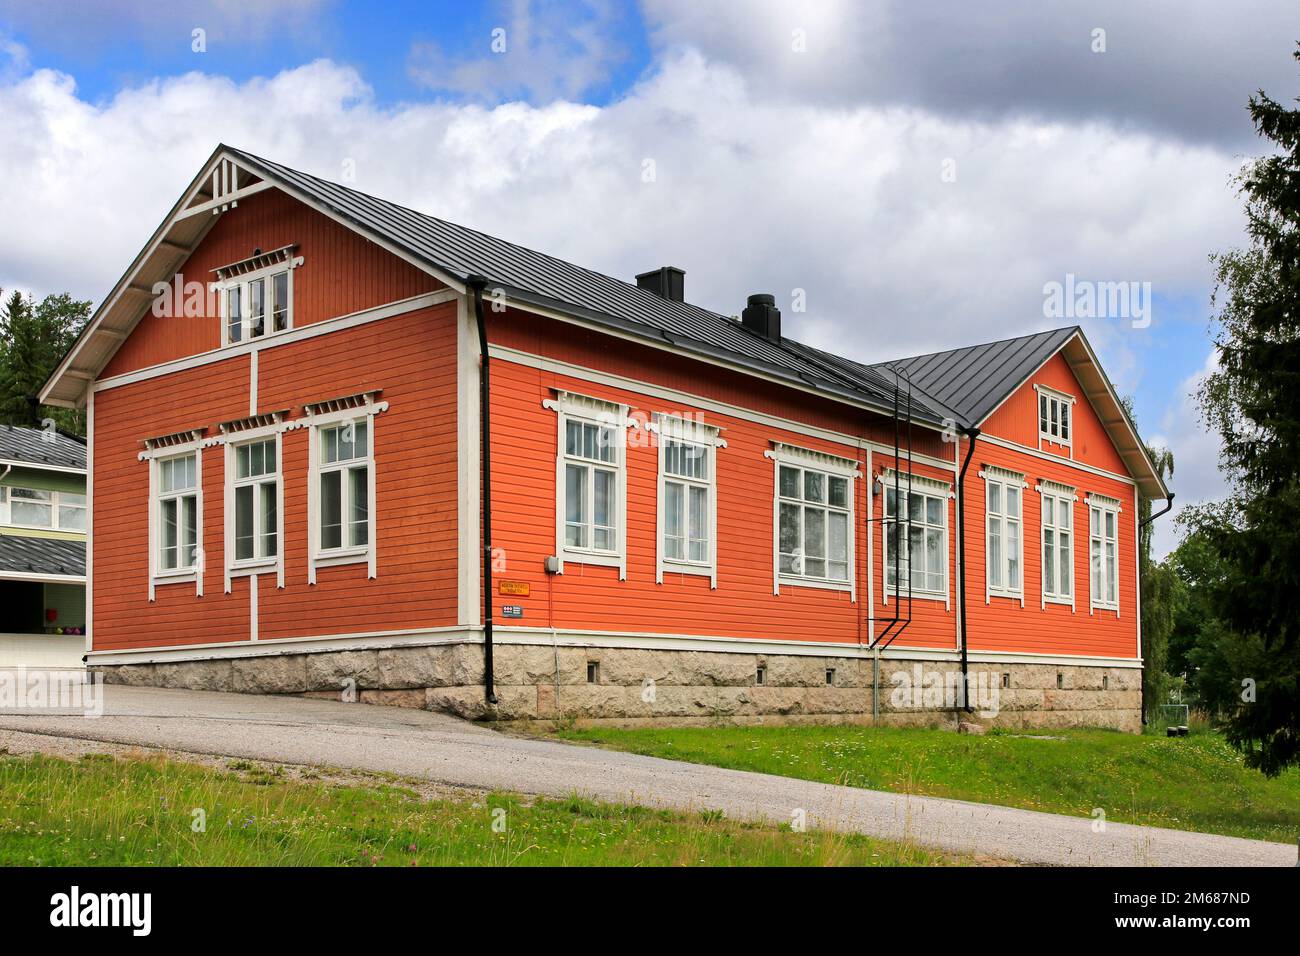 Pajula school, Pajulan Koulu, Salo, Finland in August. Pajula school is an elementary school  teaching grades 1-6. There are 5 separate buildings. Stock Photo